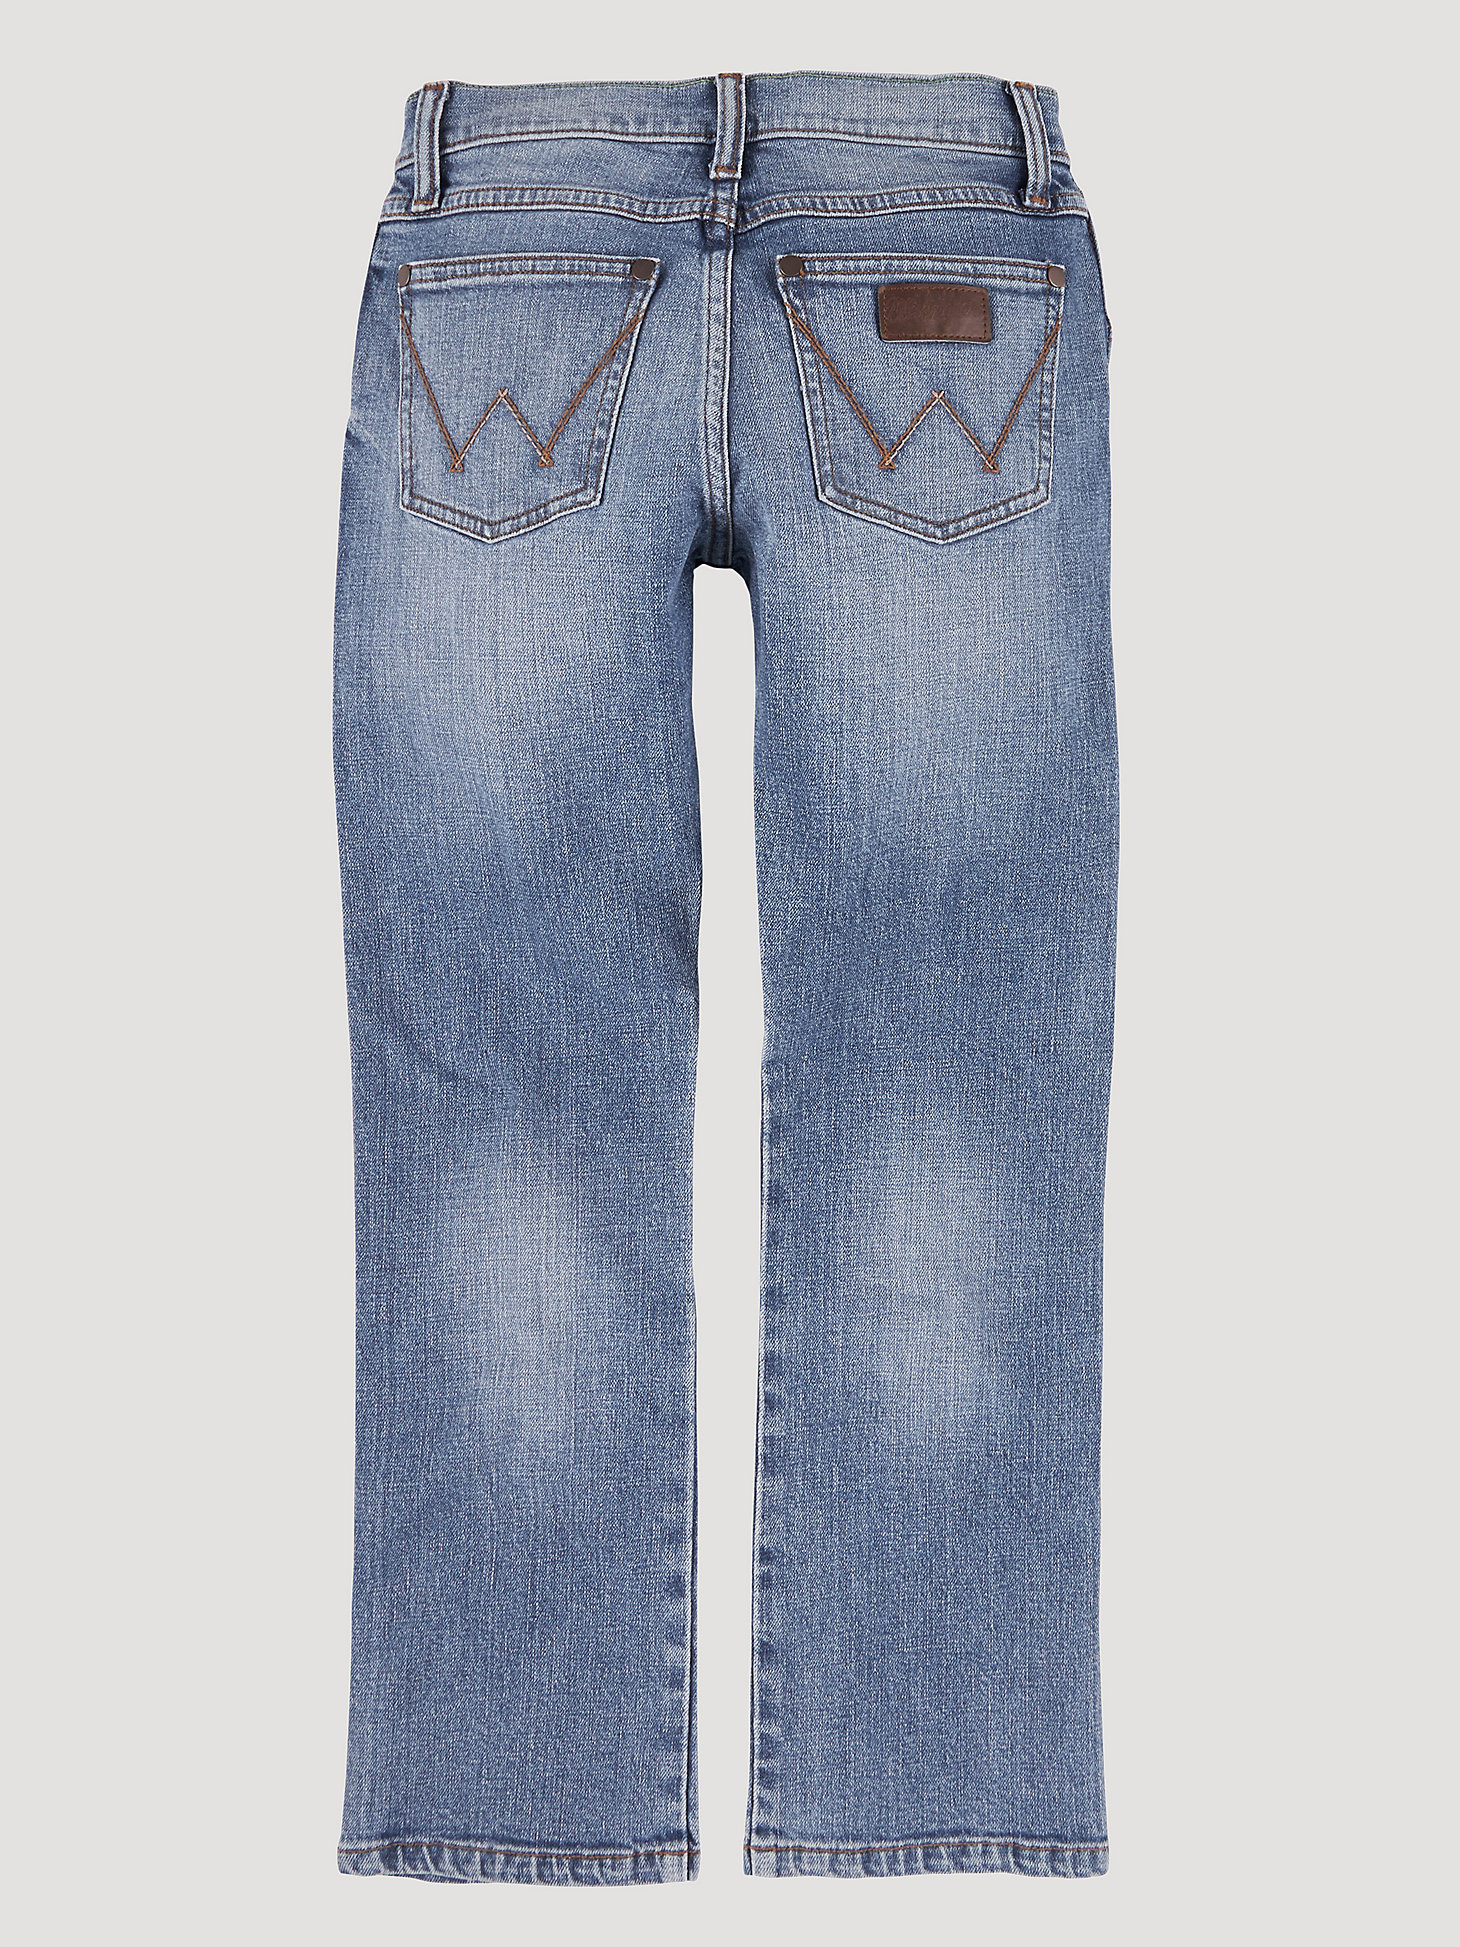 Boy's Wrangler Retro® Slim Straight Jean (8-18) in Payson alternative view 1